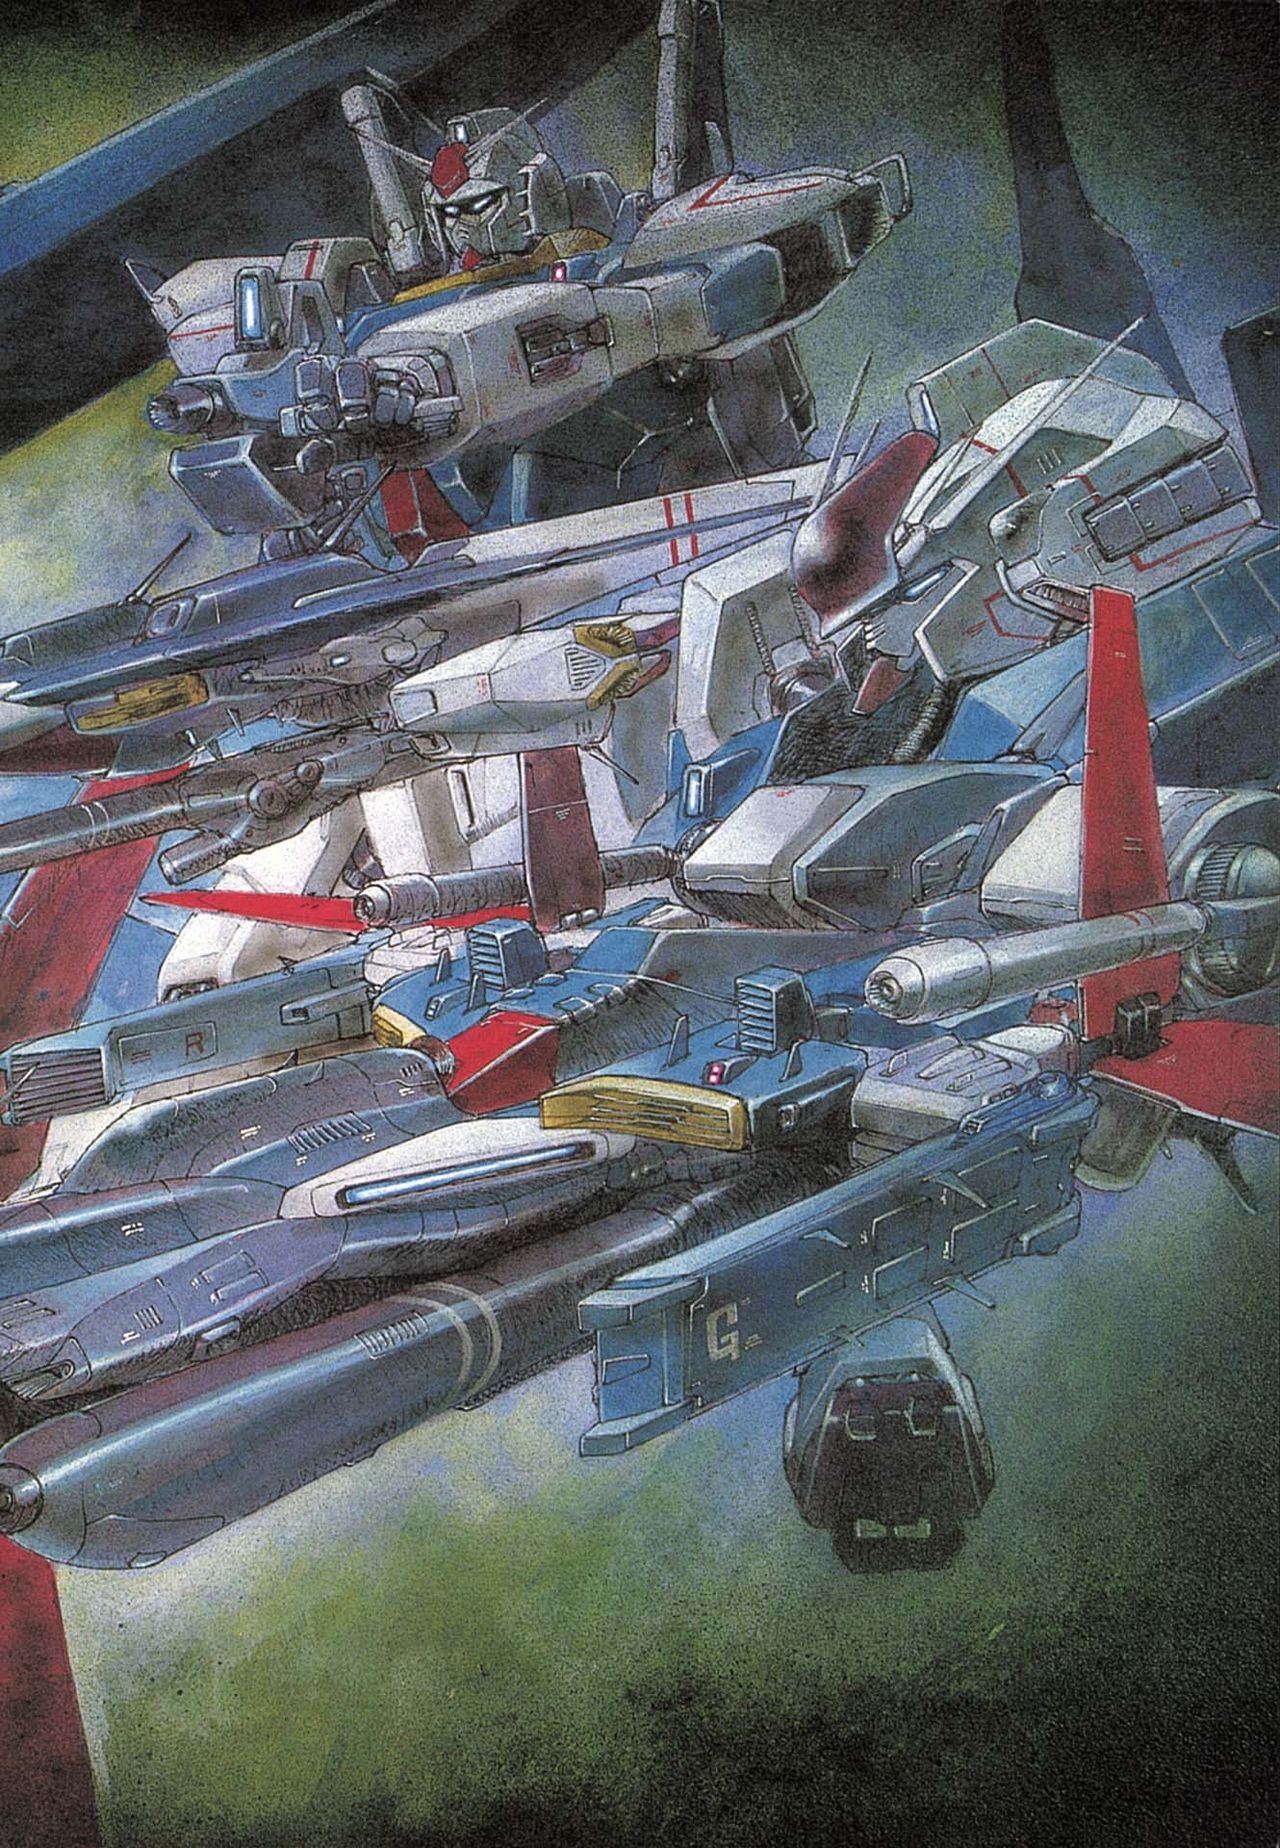 [Kazuhisa Kondo] Kazuhisa Kondo 2D & 3D Works - Go Ahead - From Mobile Suit Gundam to Original Mechanism 63